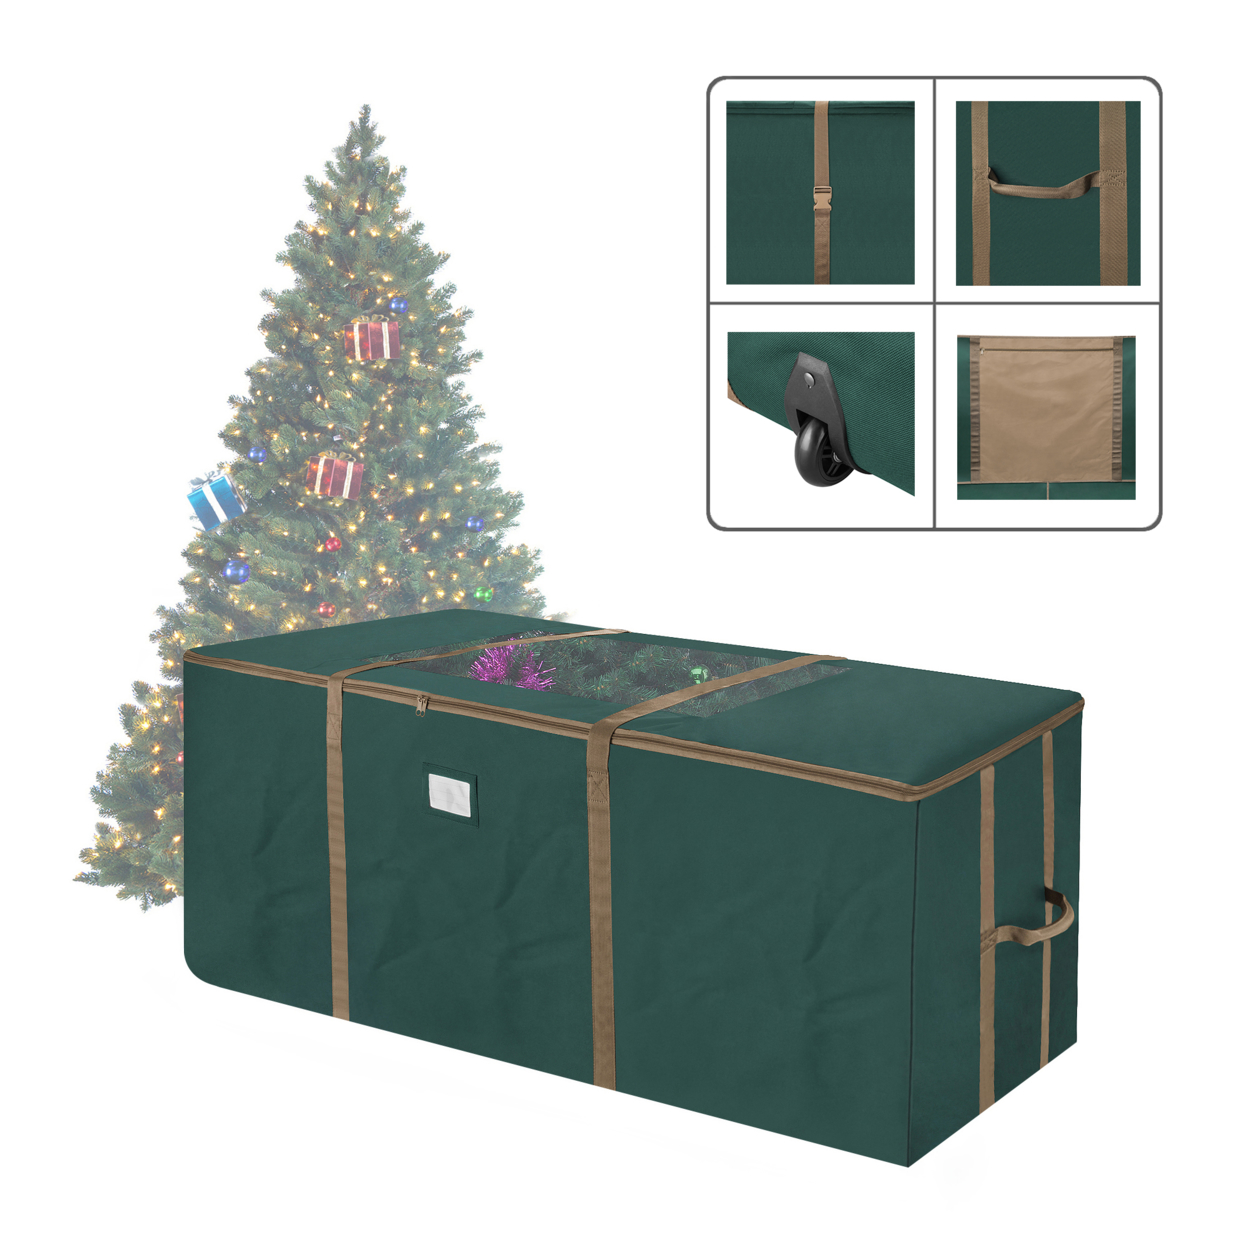 XLarge Christmas Tree Storage Wheeled Box W Window Fits 12 Ft Tree Heavy Duty - GRAY